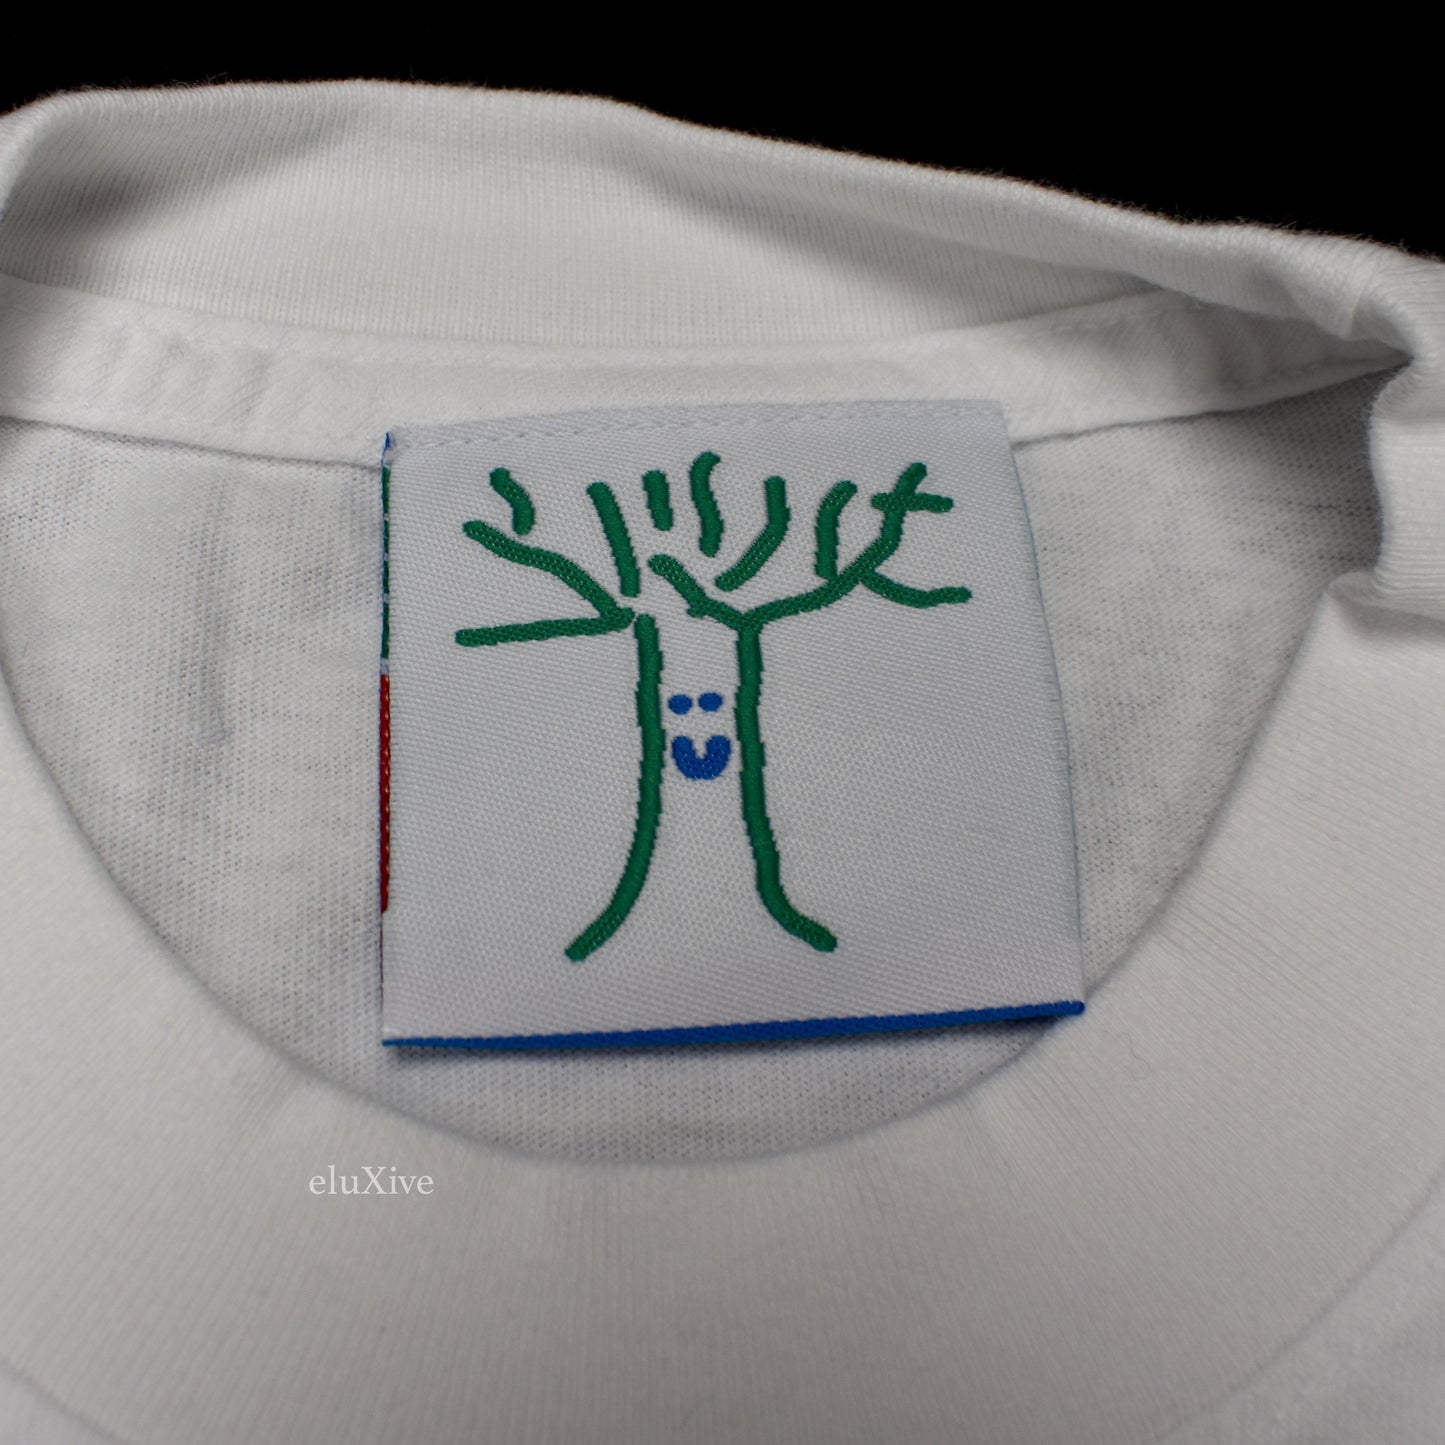 Online Ceramics - Everything Counts Caterpillar Logo T-Shirt (White)